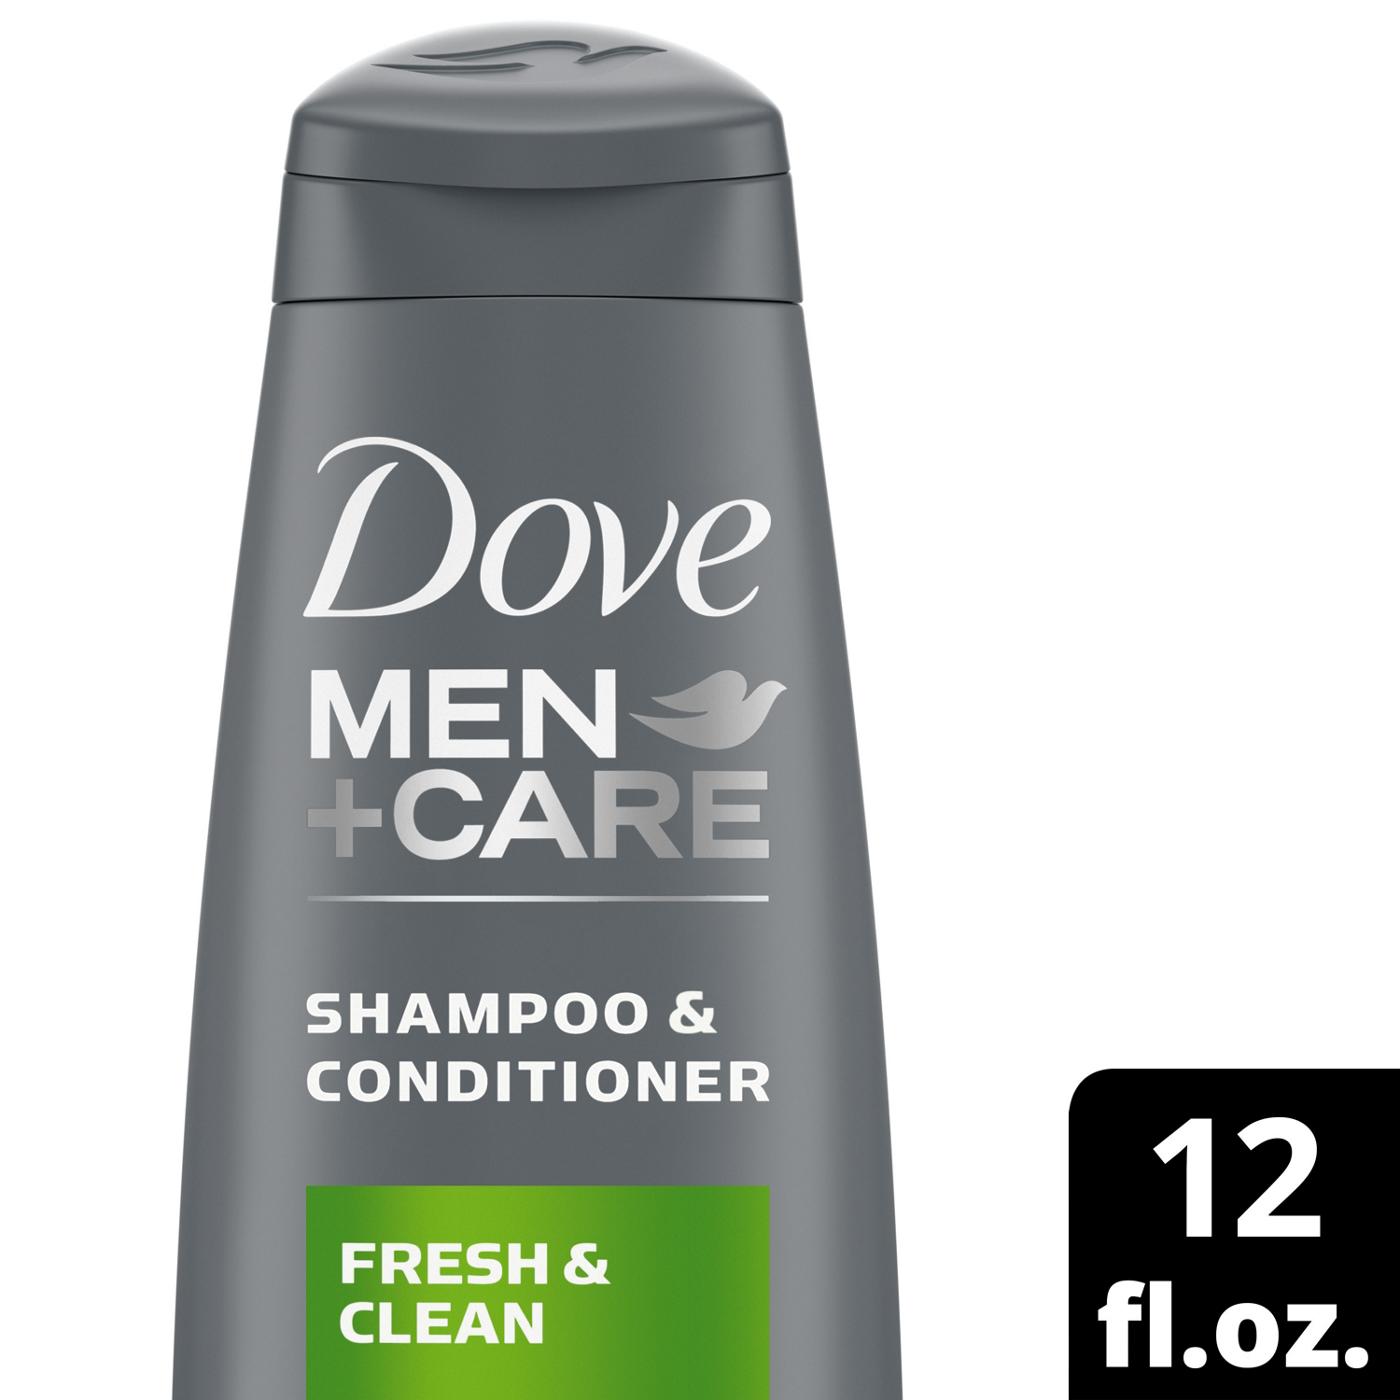 Dove Men+Care 2 in 1 Shampoo + Conditioner - Fresh + Clean; image 2 of 6